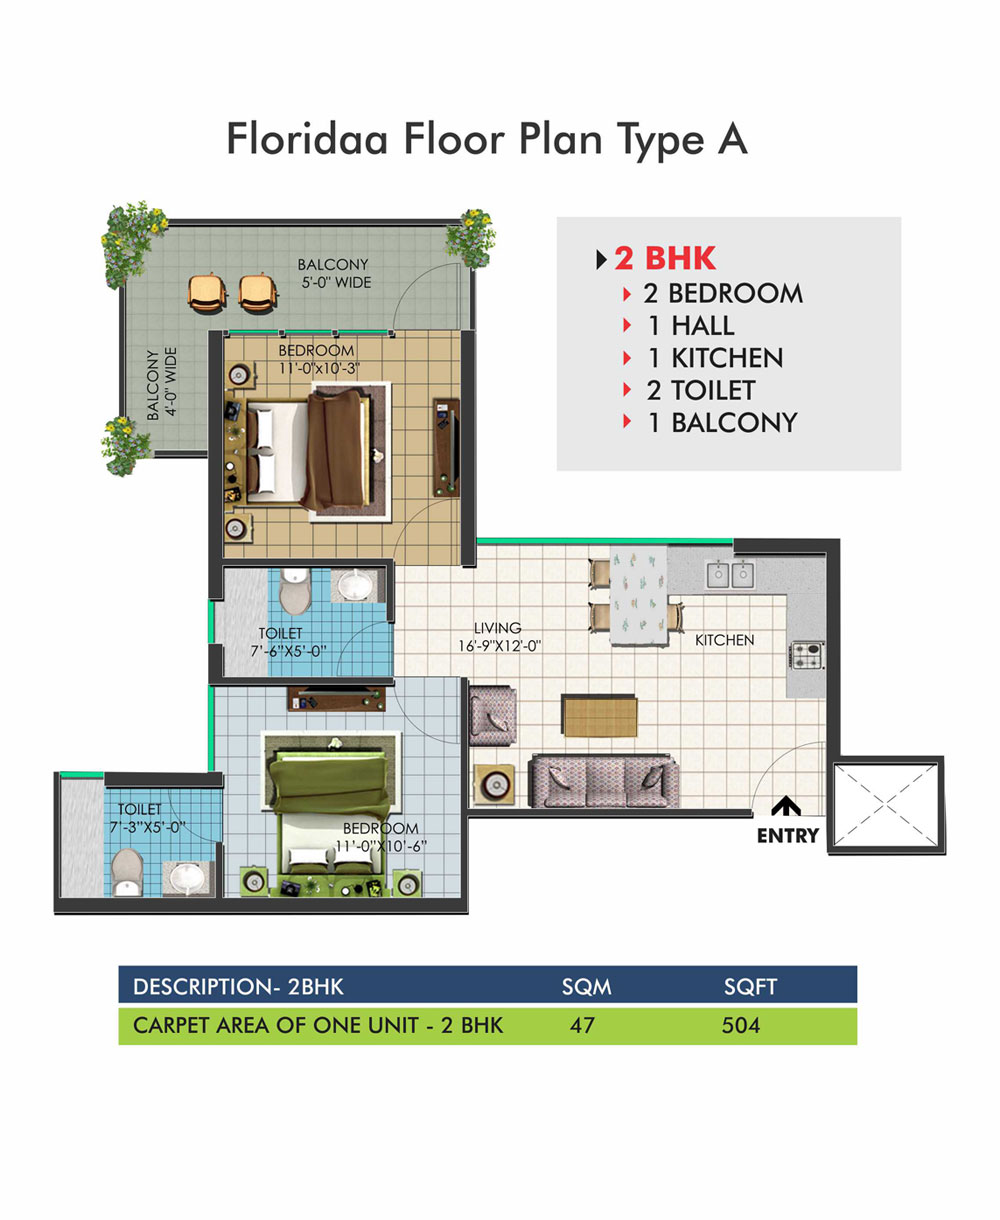 era divine 2 bhk floor plan in 1005 sq. feets